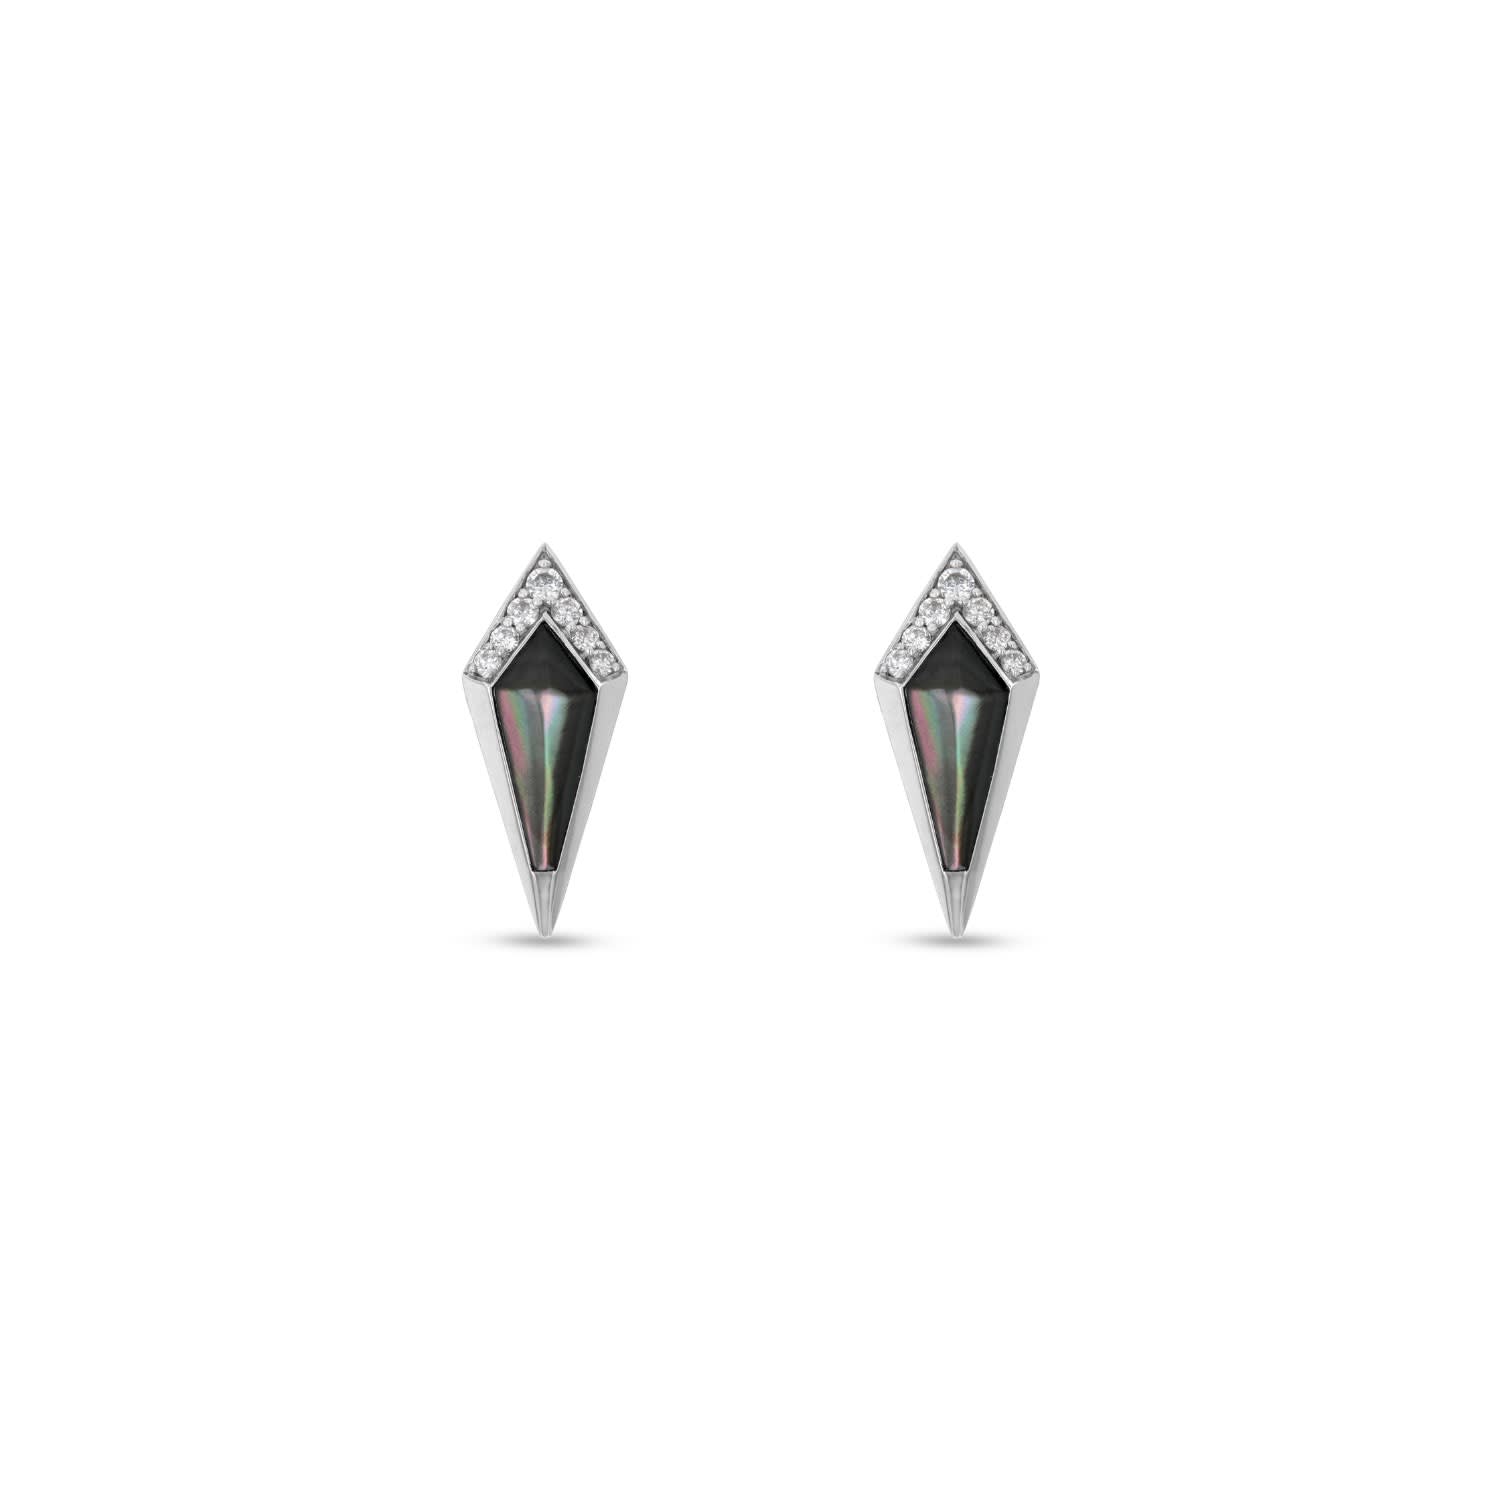 pearl earrings with diamonds around